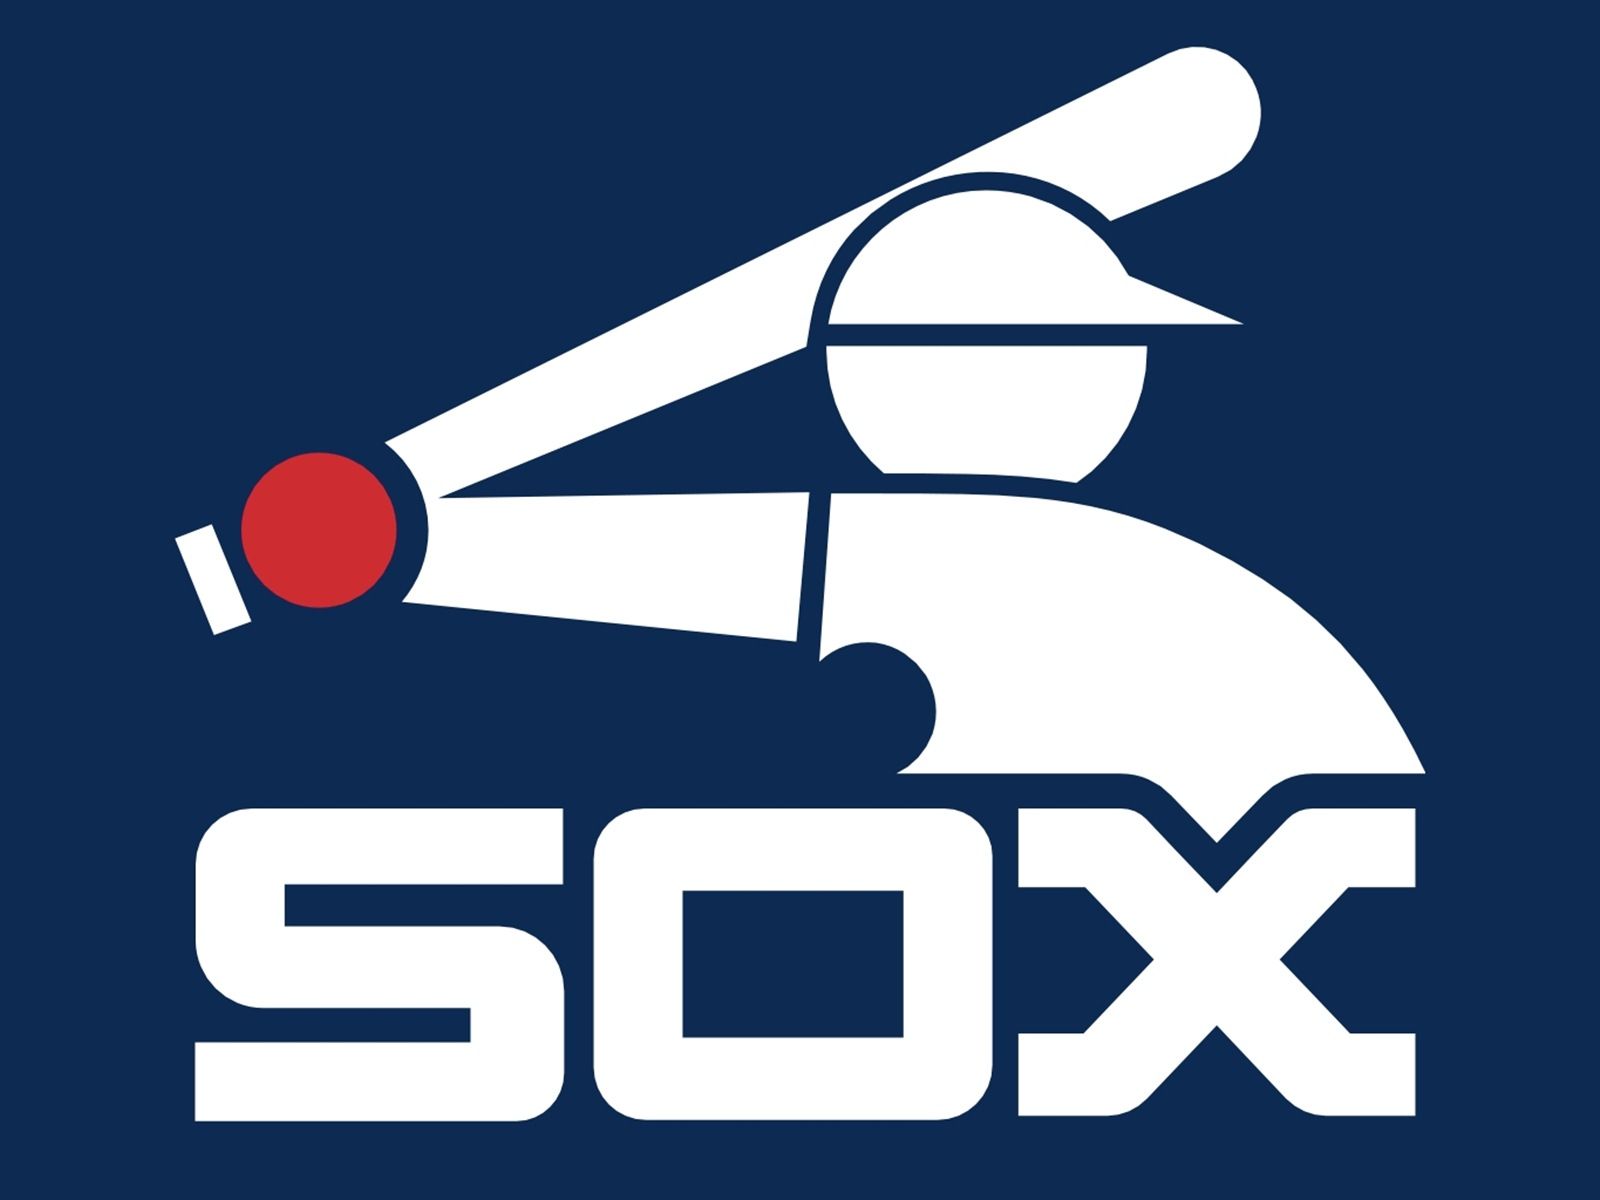 Free White Sox Logo Png, Download Free Clip Art, Free Clip.